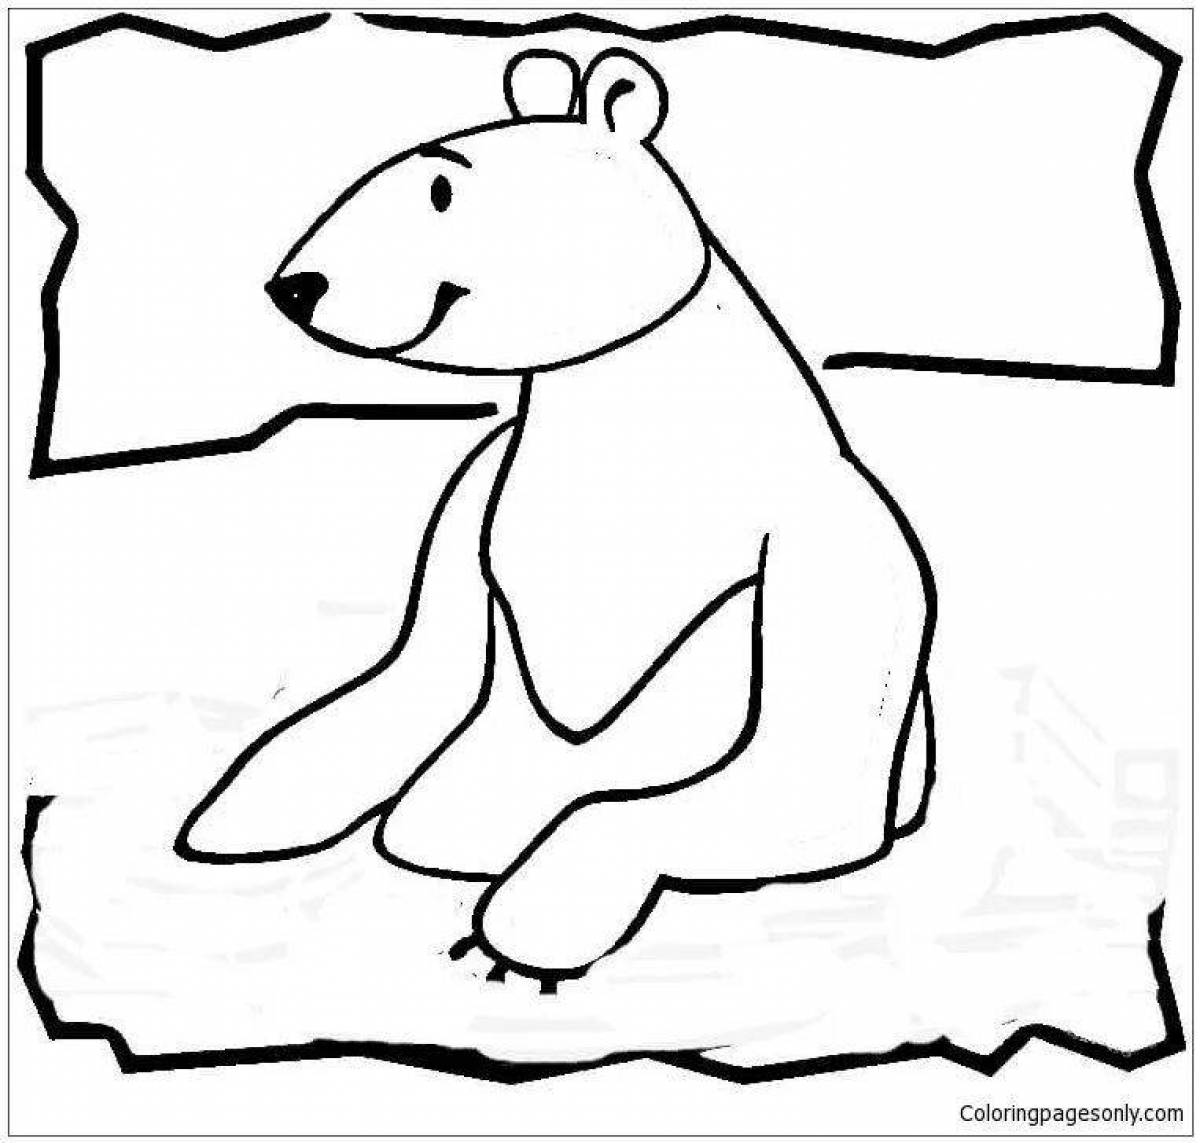 Majestic arctic polar bear coloring page